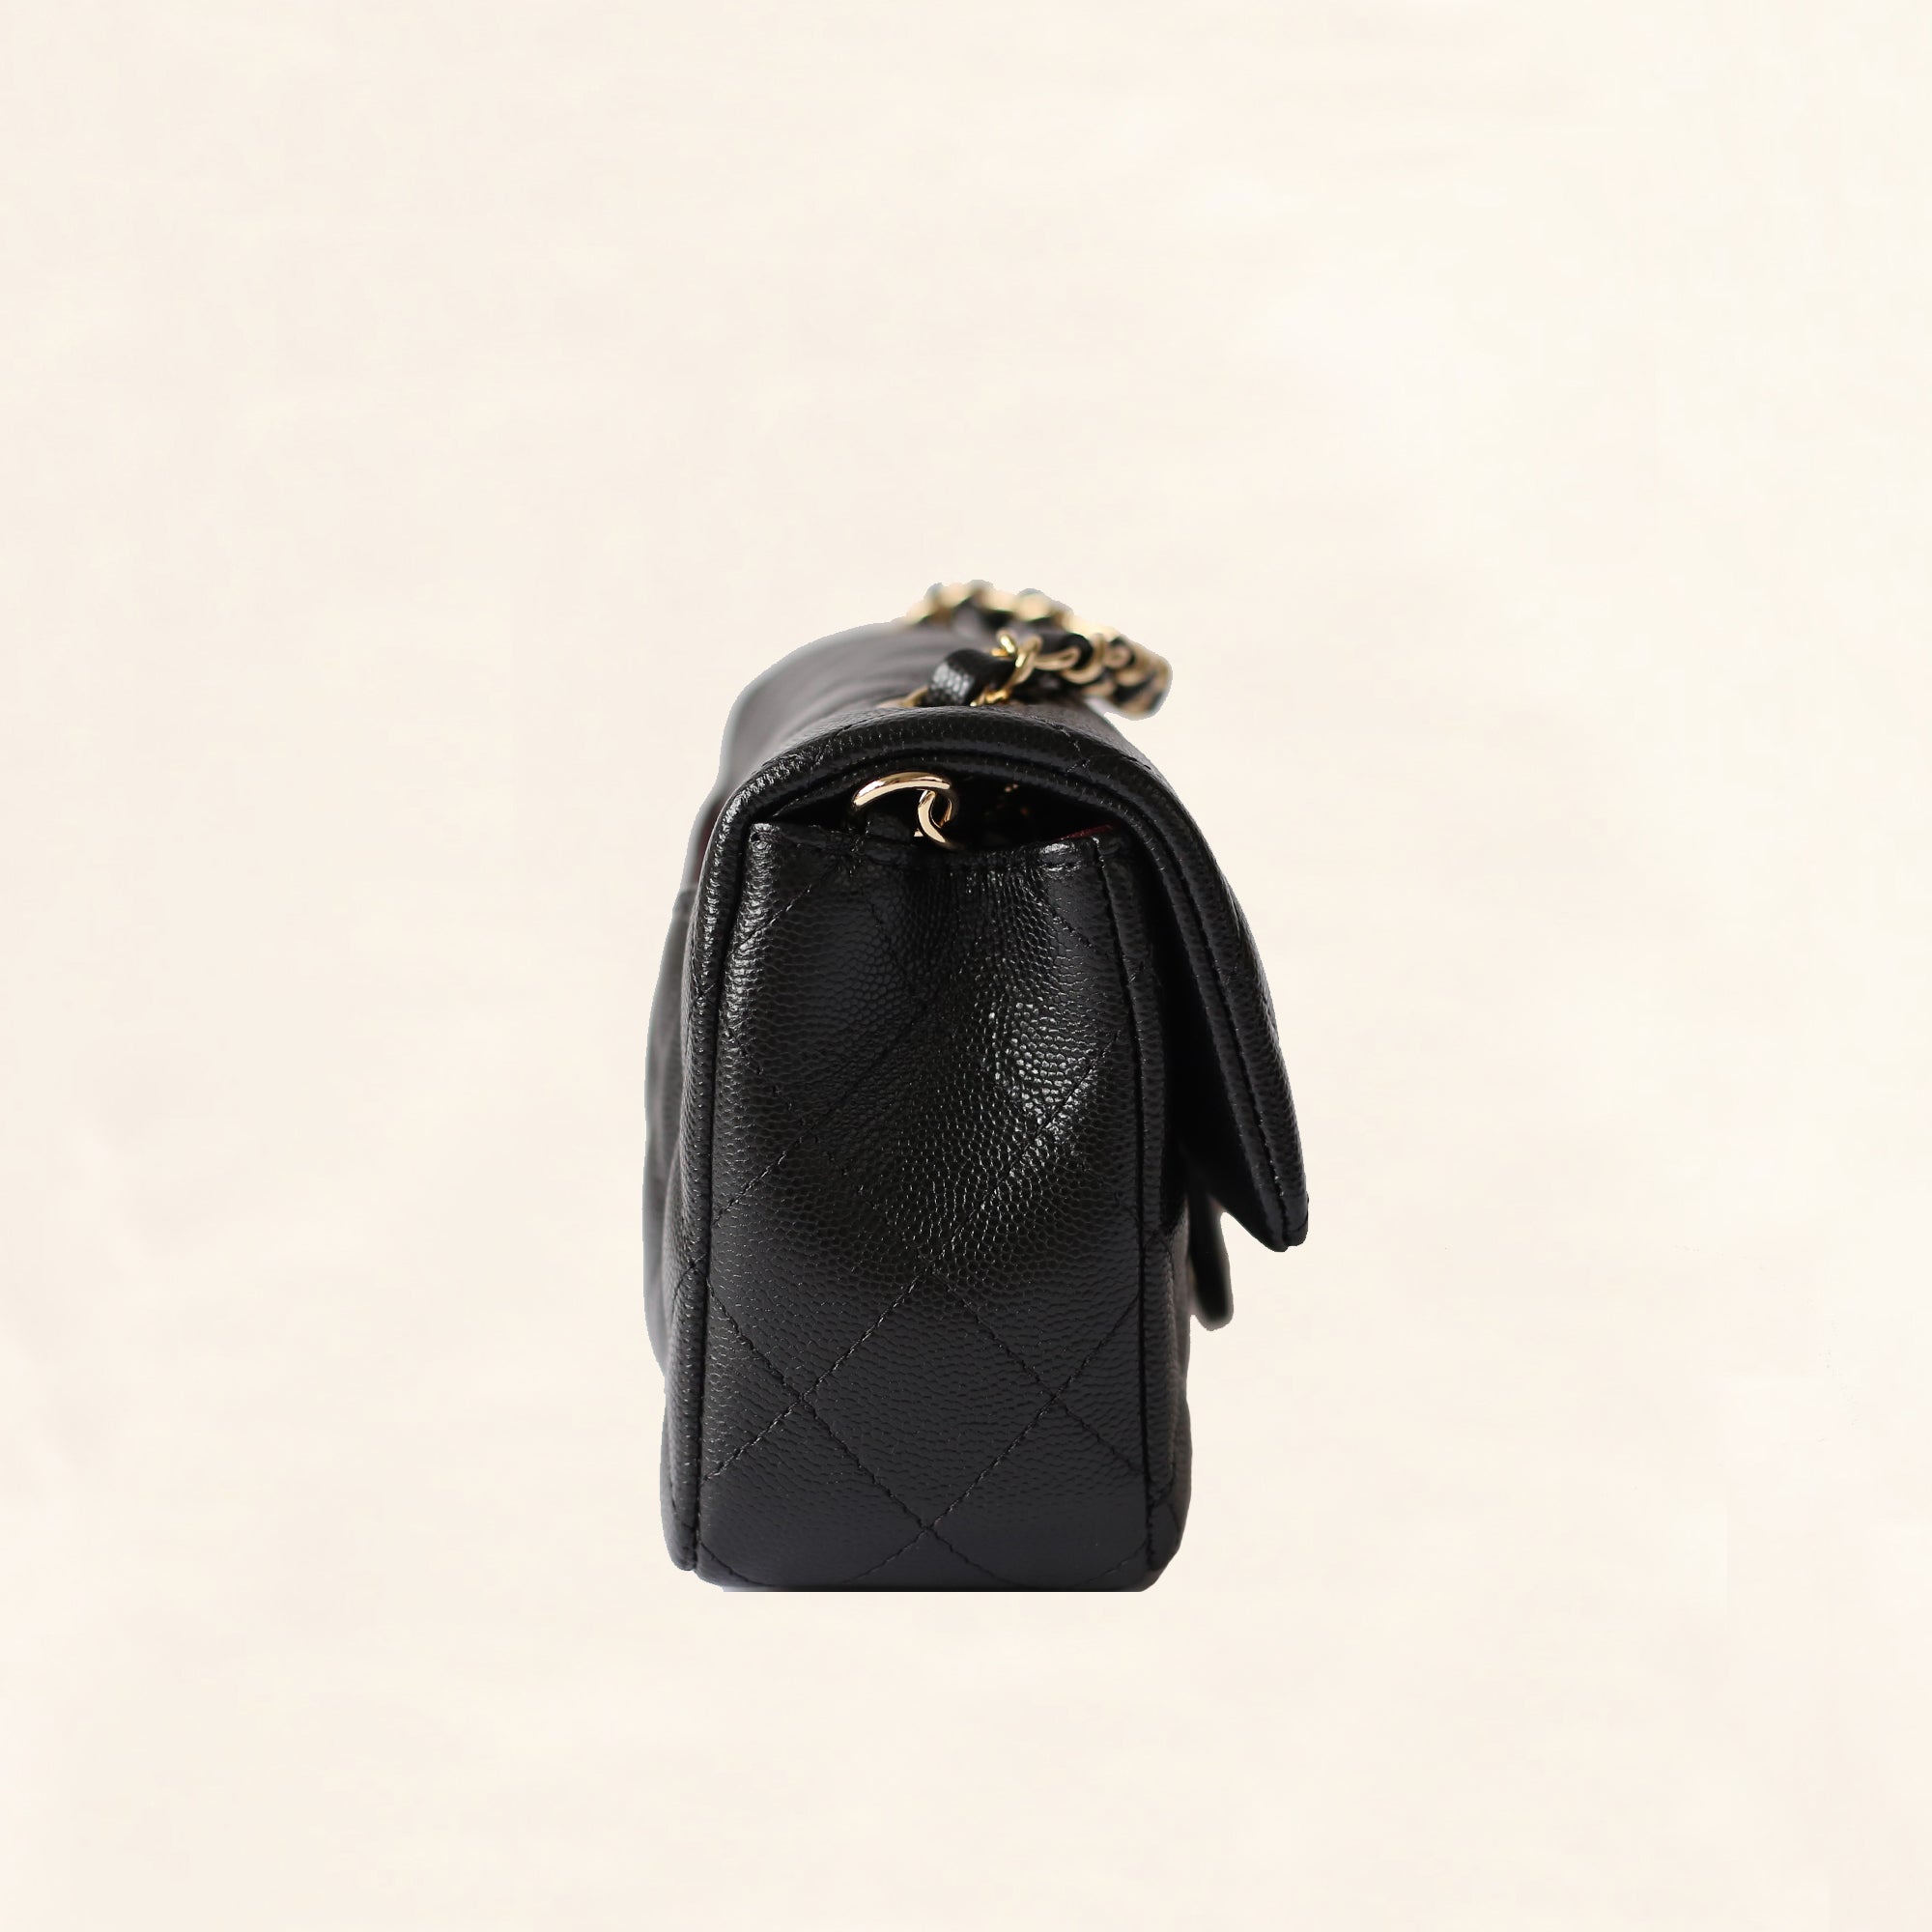 black classic chanel flap bag